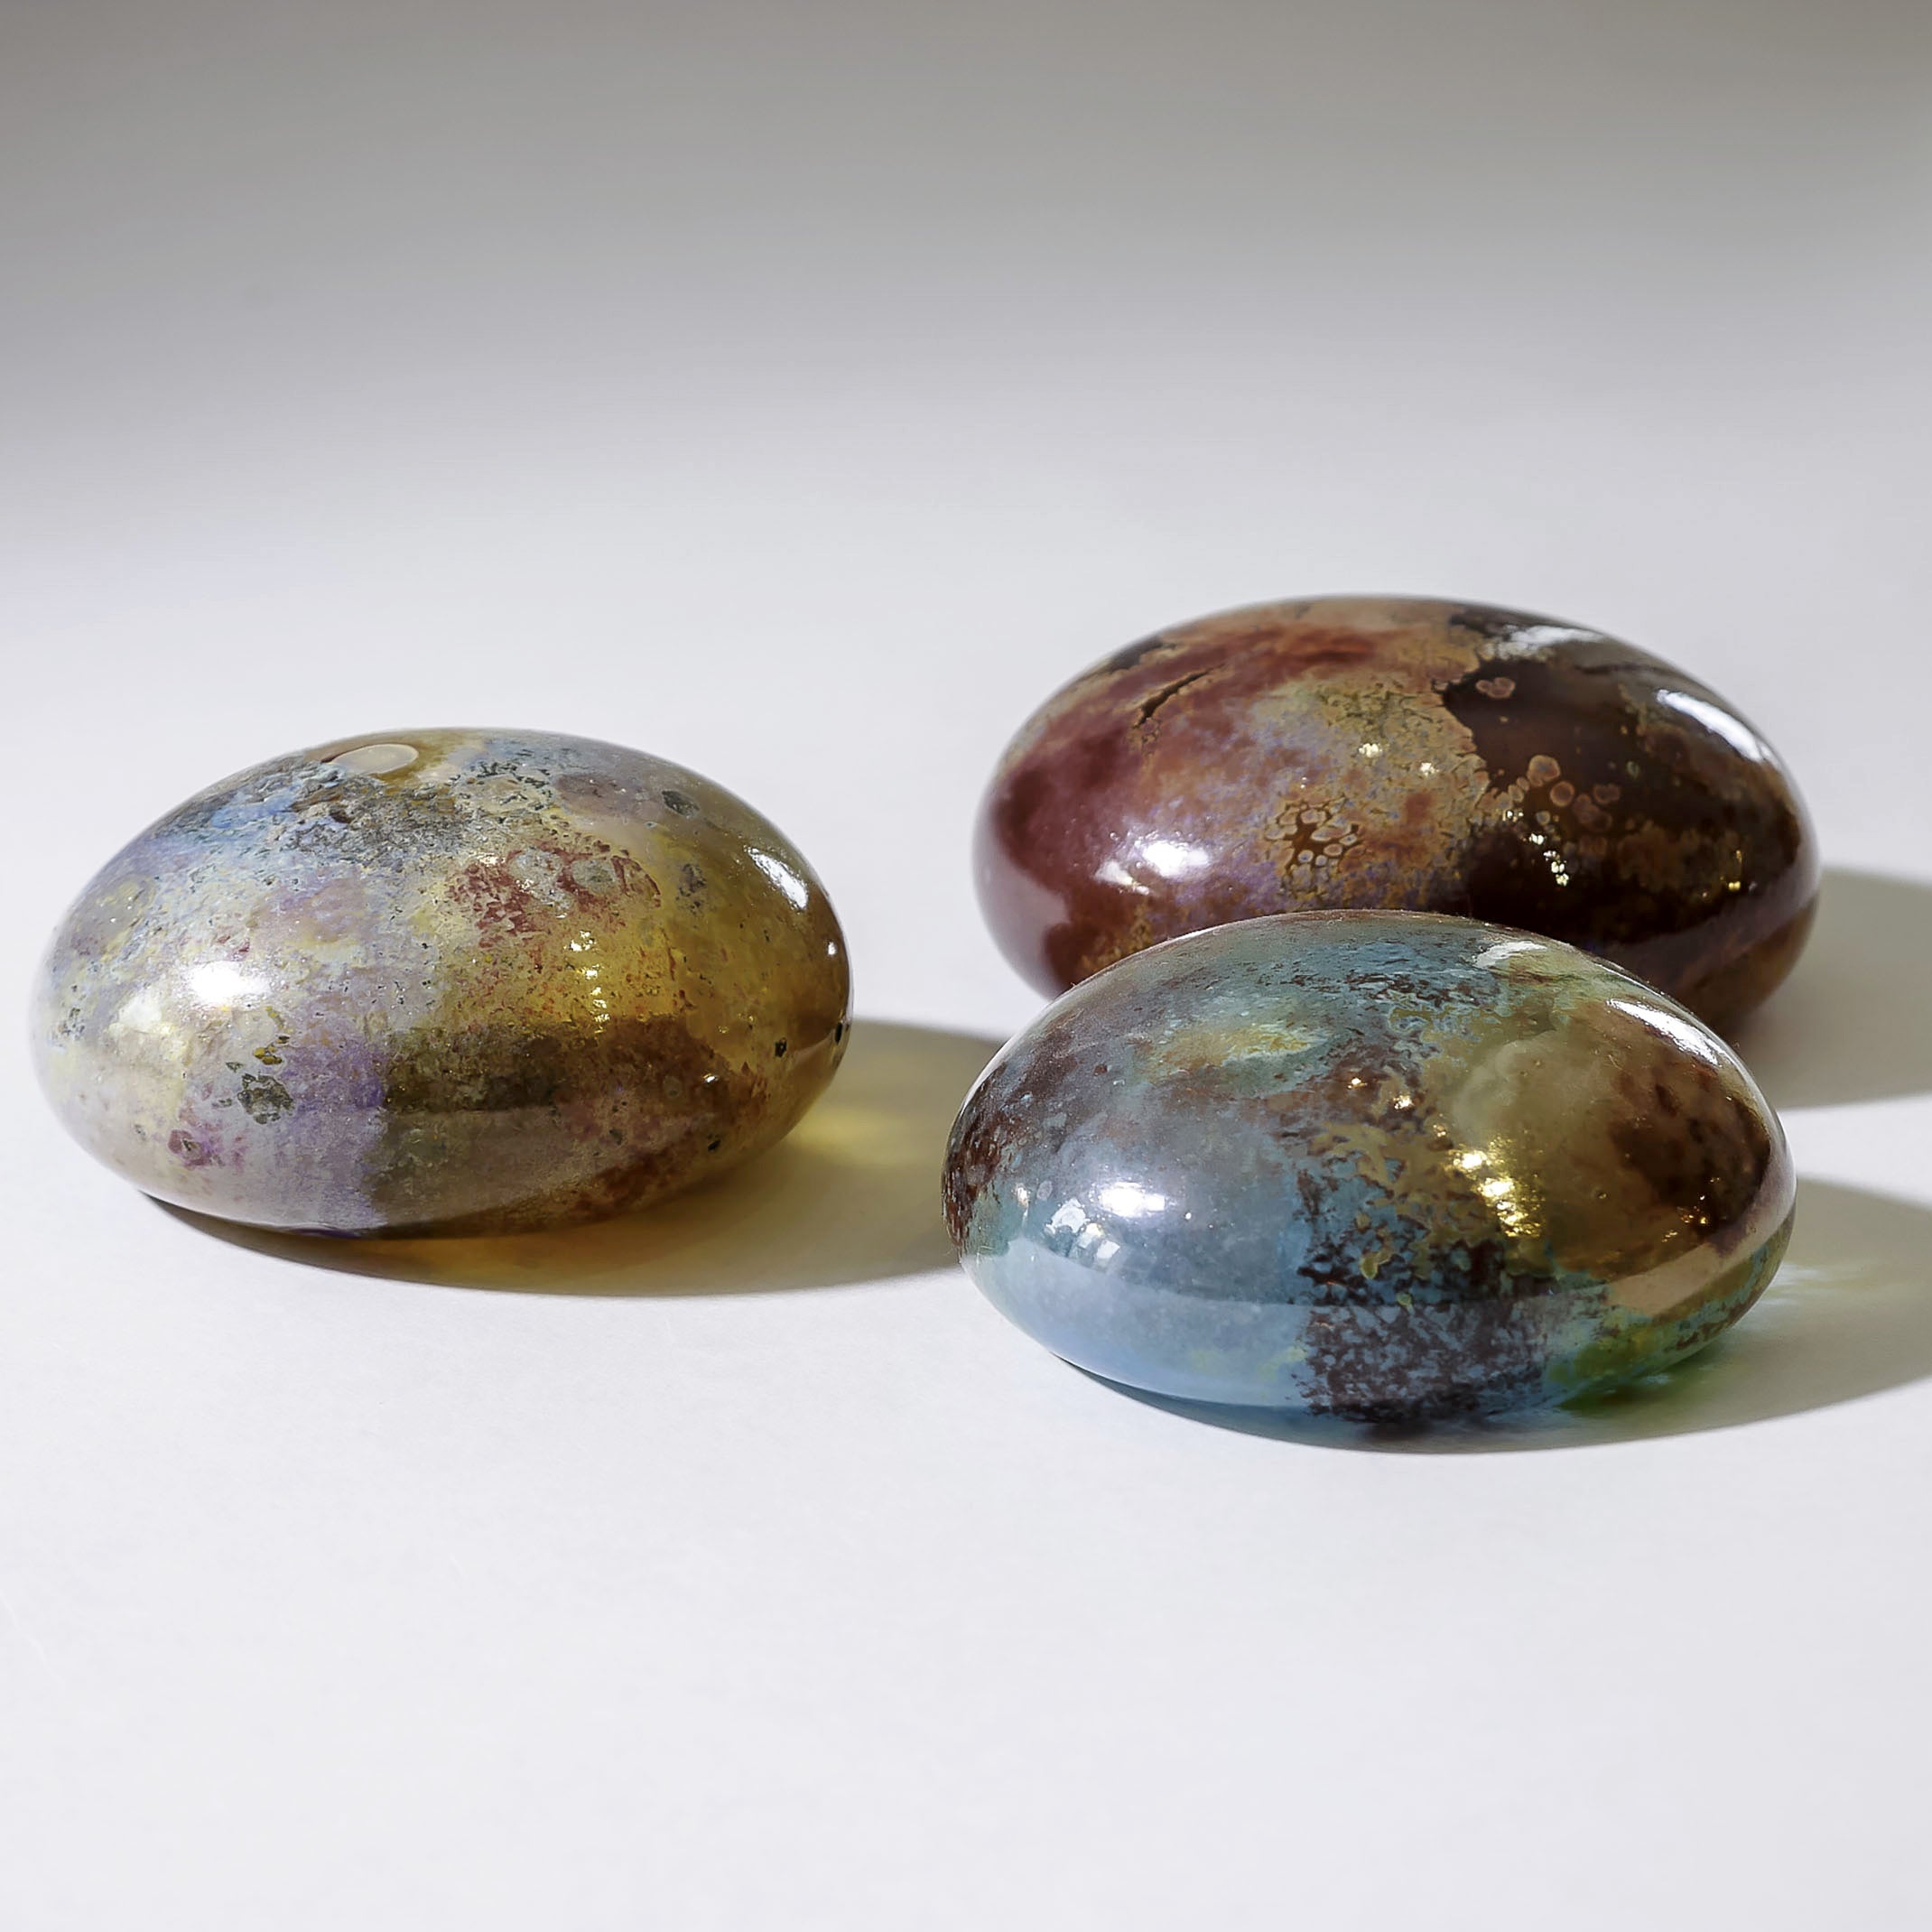 Blown Glass Ornaments: "River Rocks" by Brad Stearns